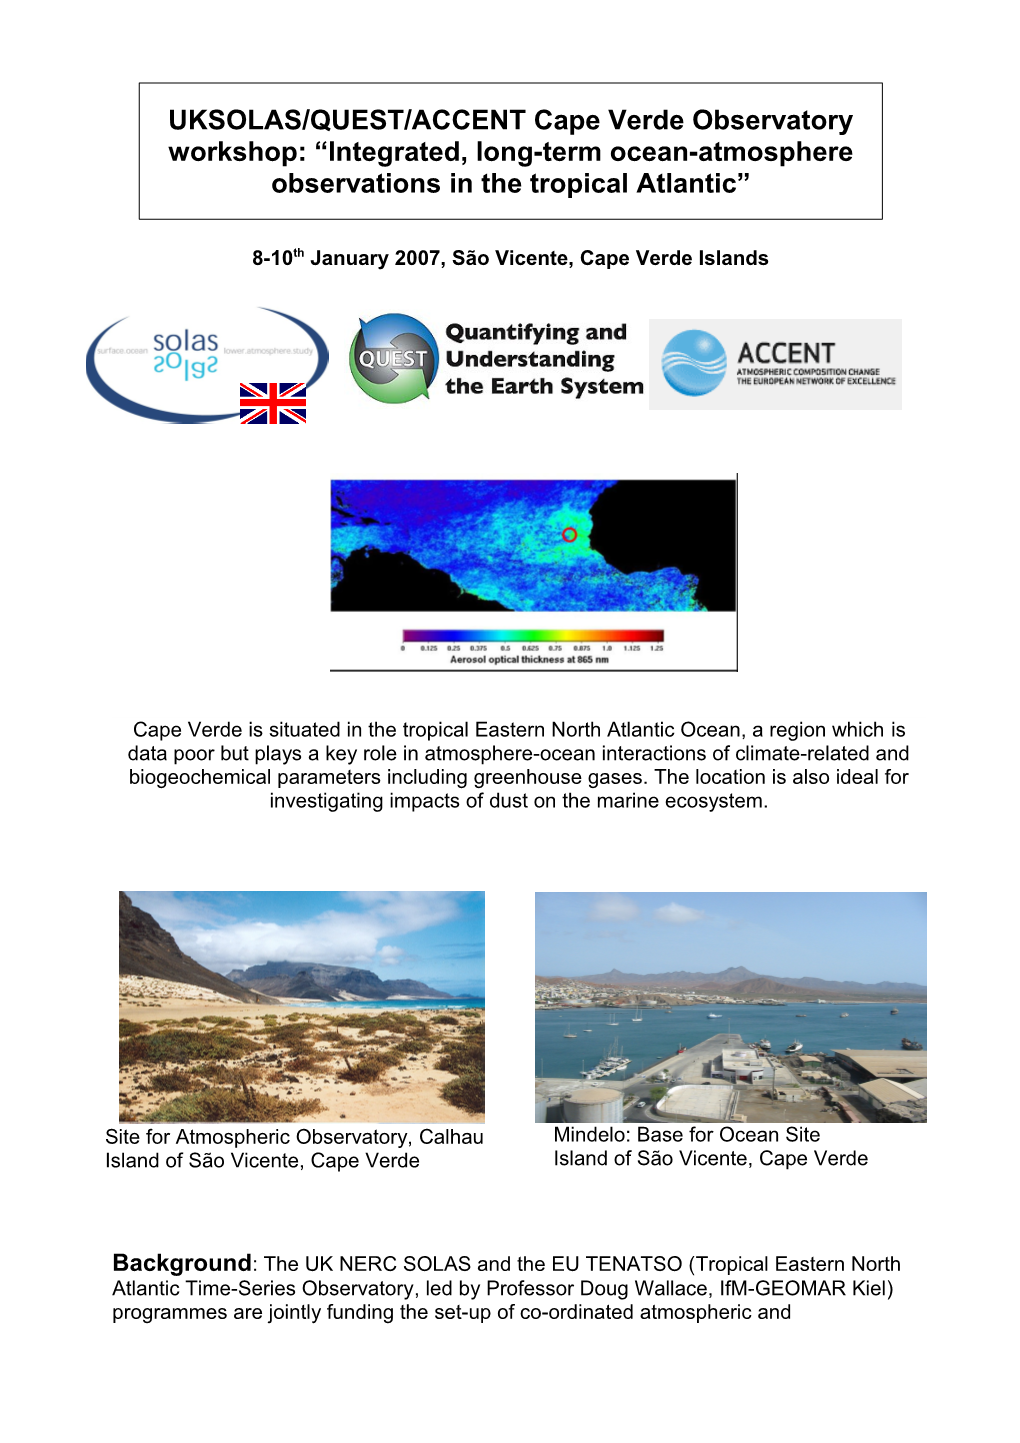 UKSOLAS/QUEST/ACCENT Cape Verde Observatory Workshop: Integrated, Long Term Ocean-Atmosphere